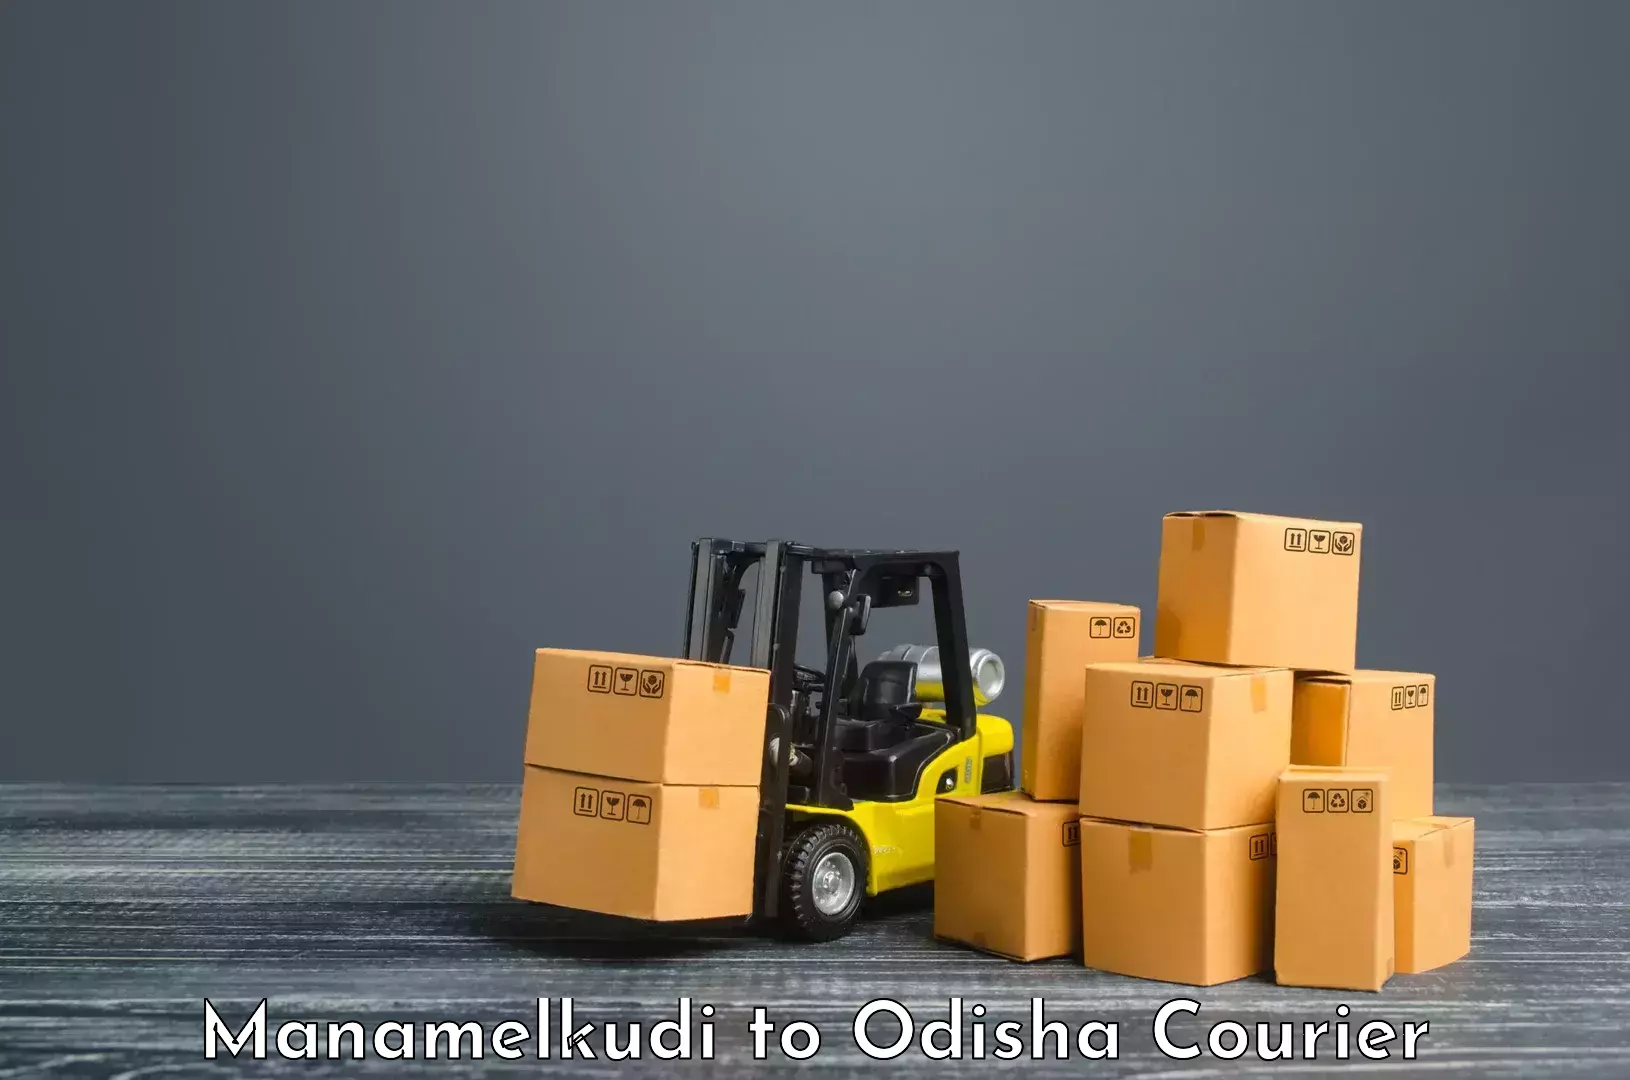 Budget-friendly shipping Manamelkudi to Odisha